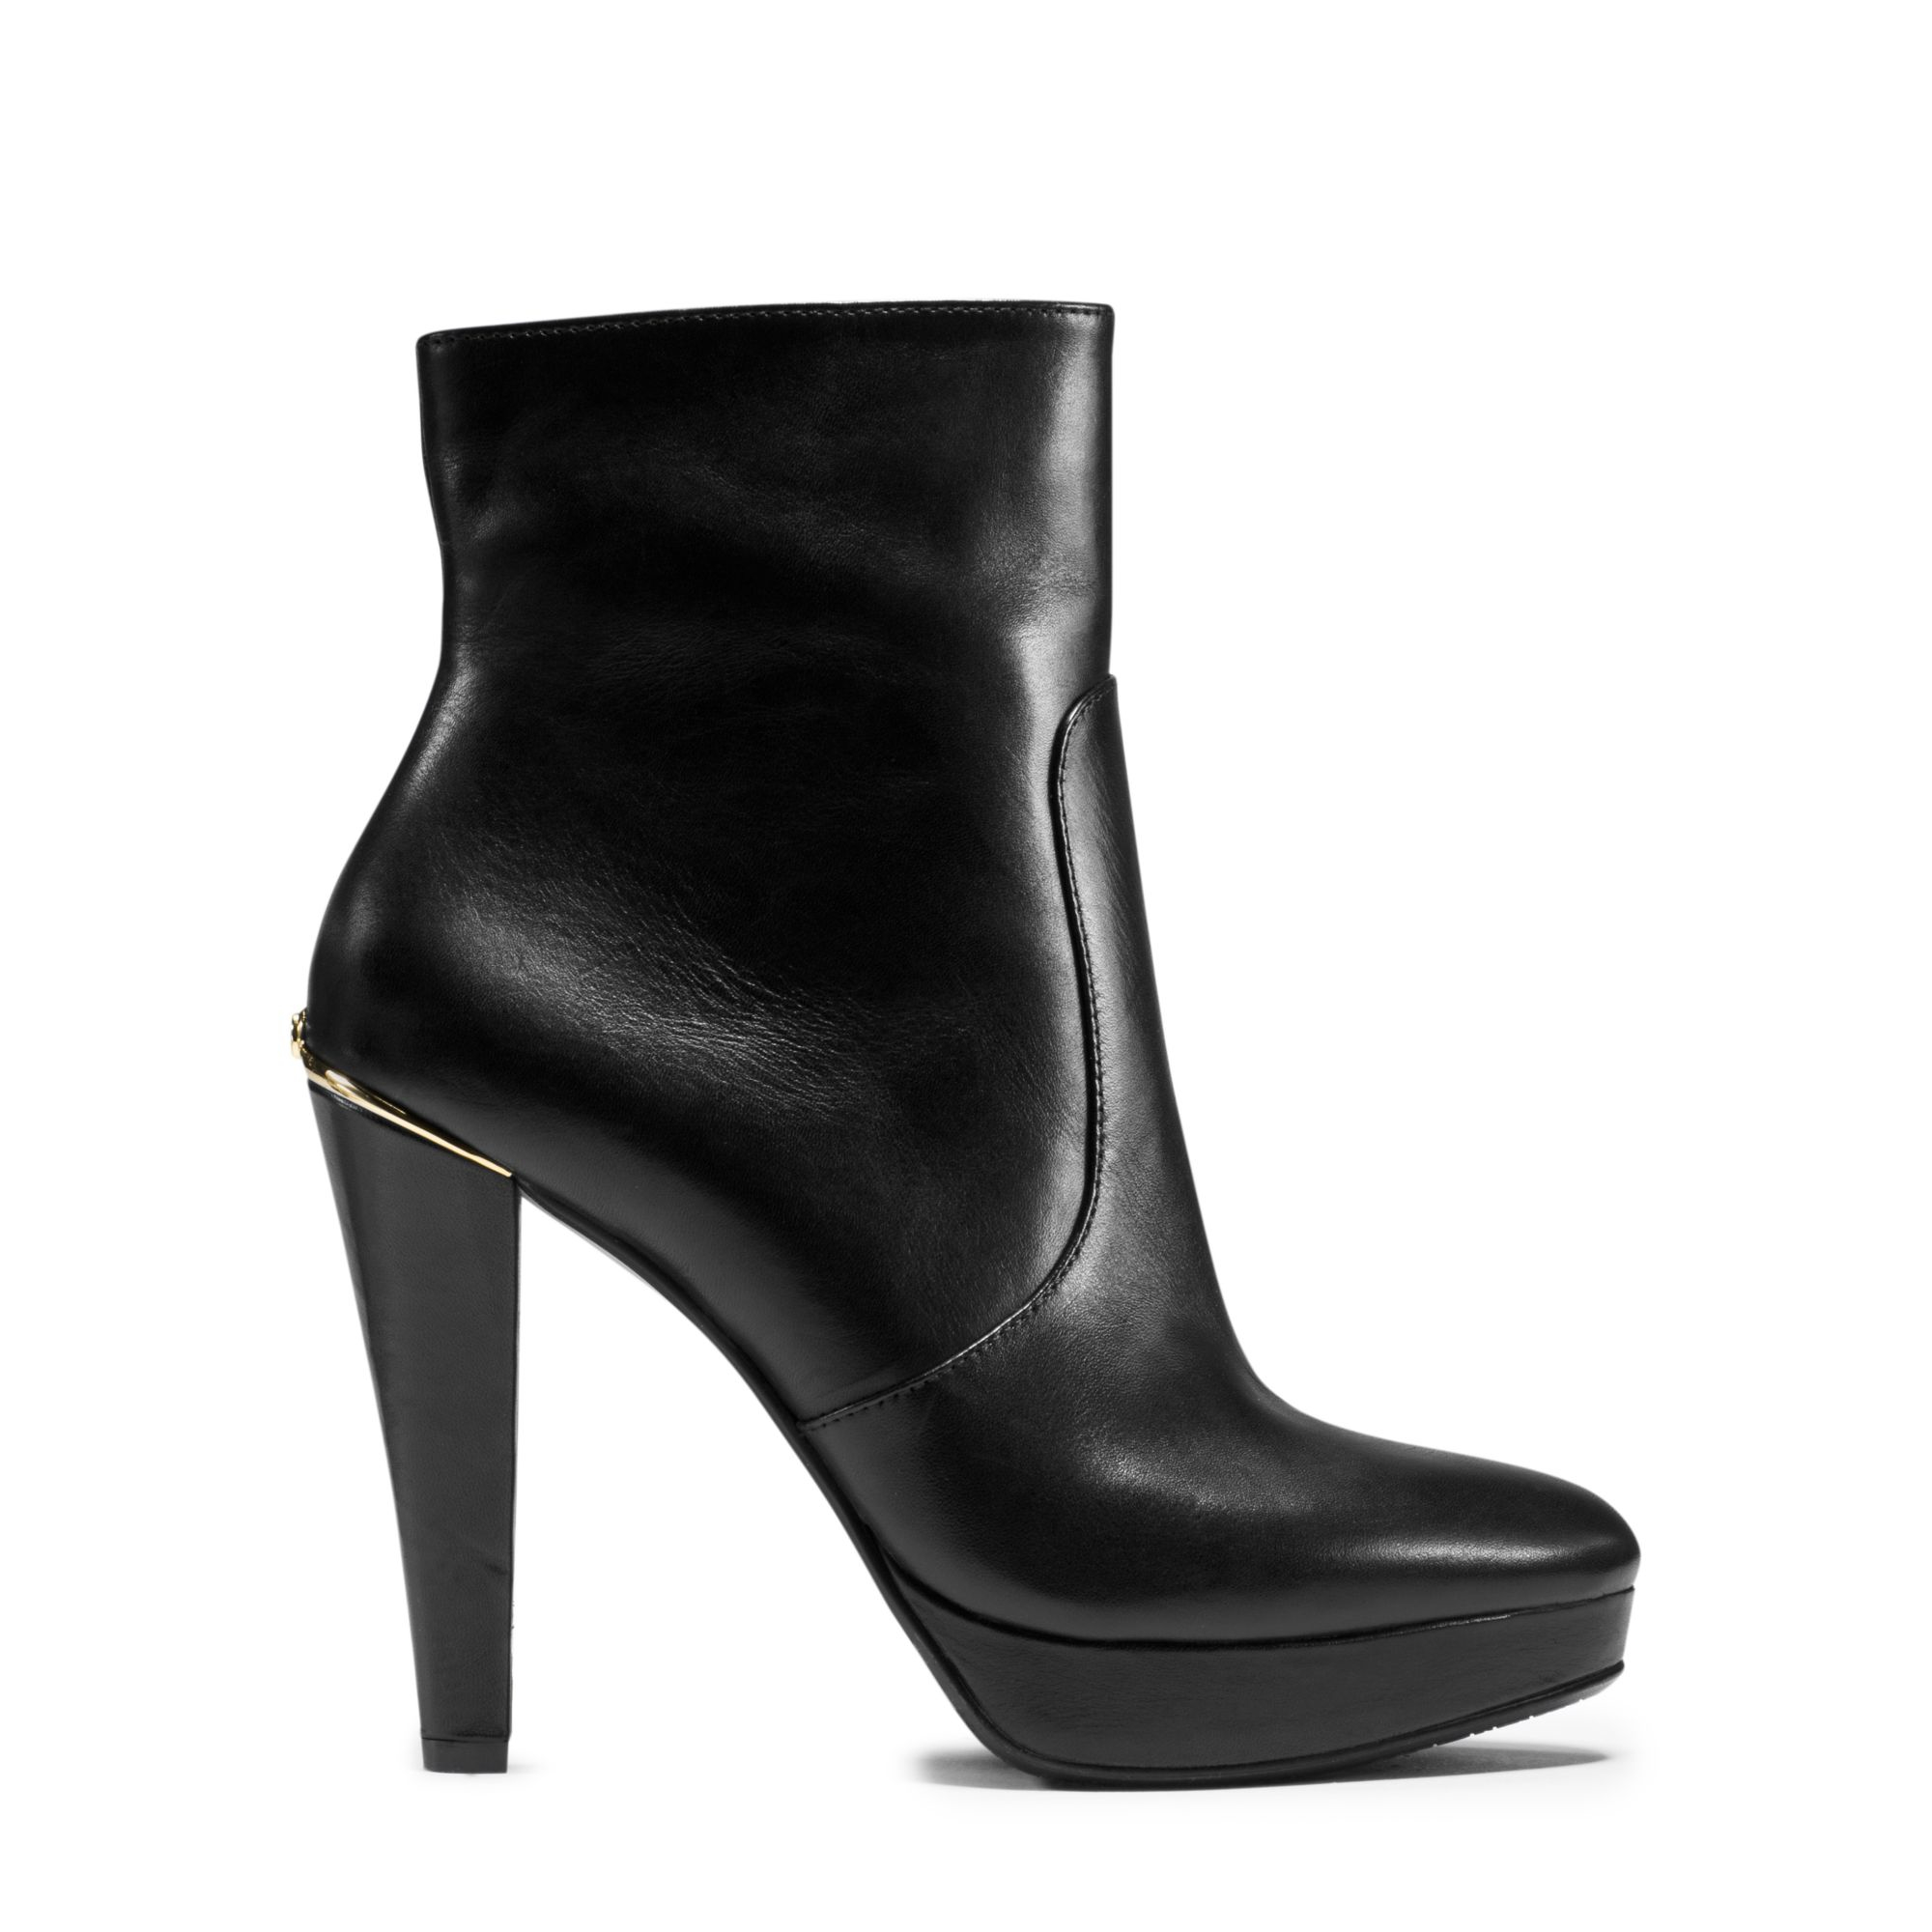 Lyst - Michael Kors Georgia Leather Platform Ankle Boot in Black